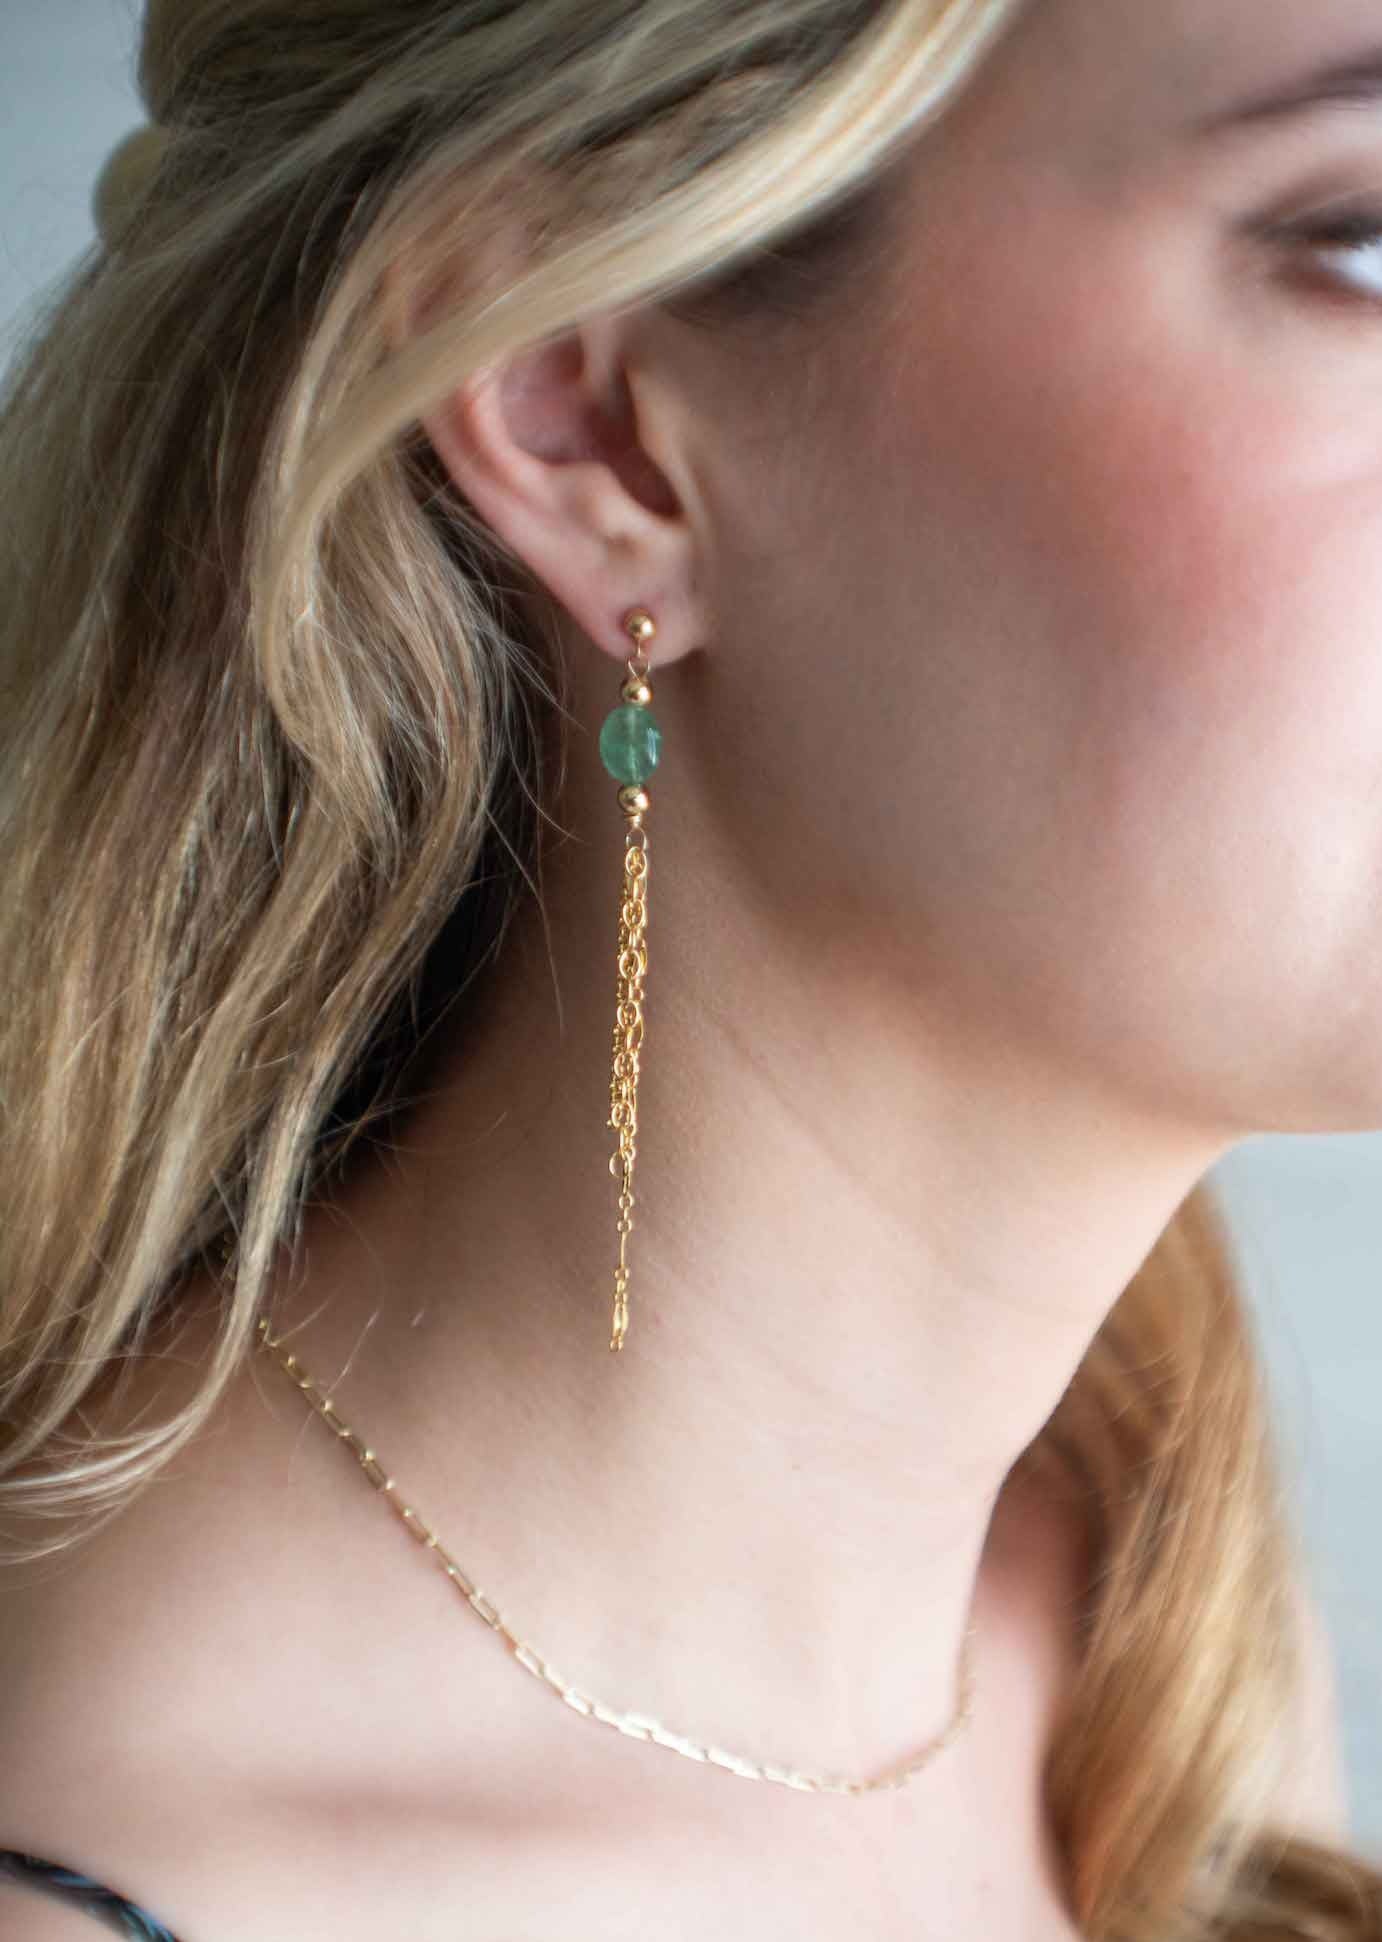 Gemstone Tassel Earrings long Delicate Gold Earrings Gift for Women Best Gifts for Girls